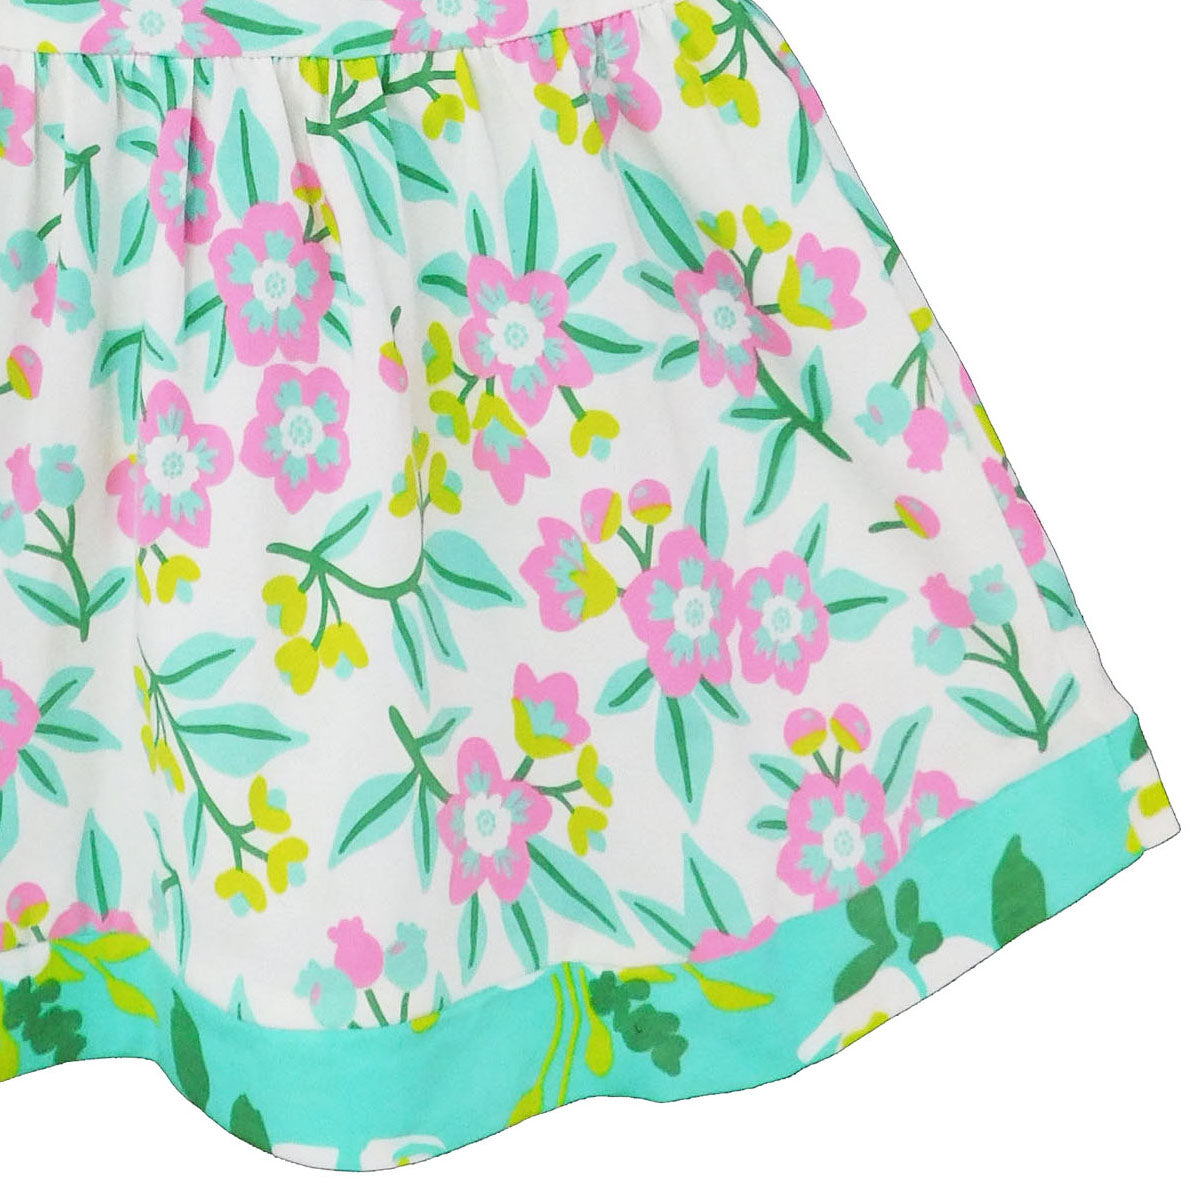 AnnLoren Little Big Girls Dress Pastel Floral Cotton Knit Sleeveless Holiday Spring Summer Clothes